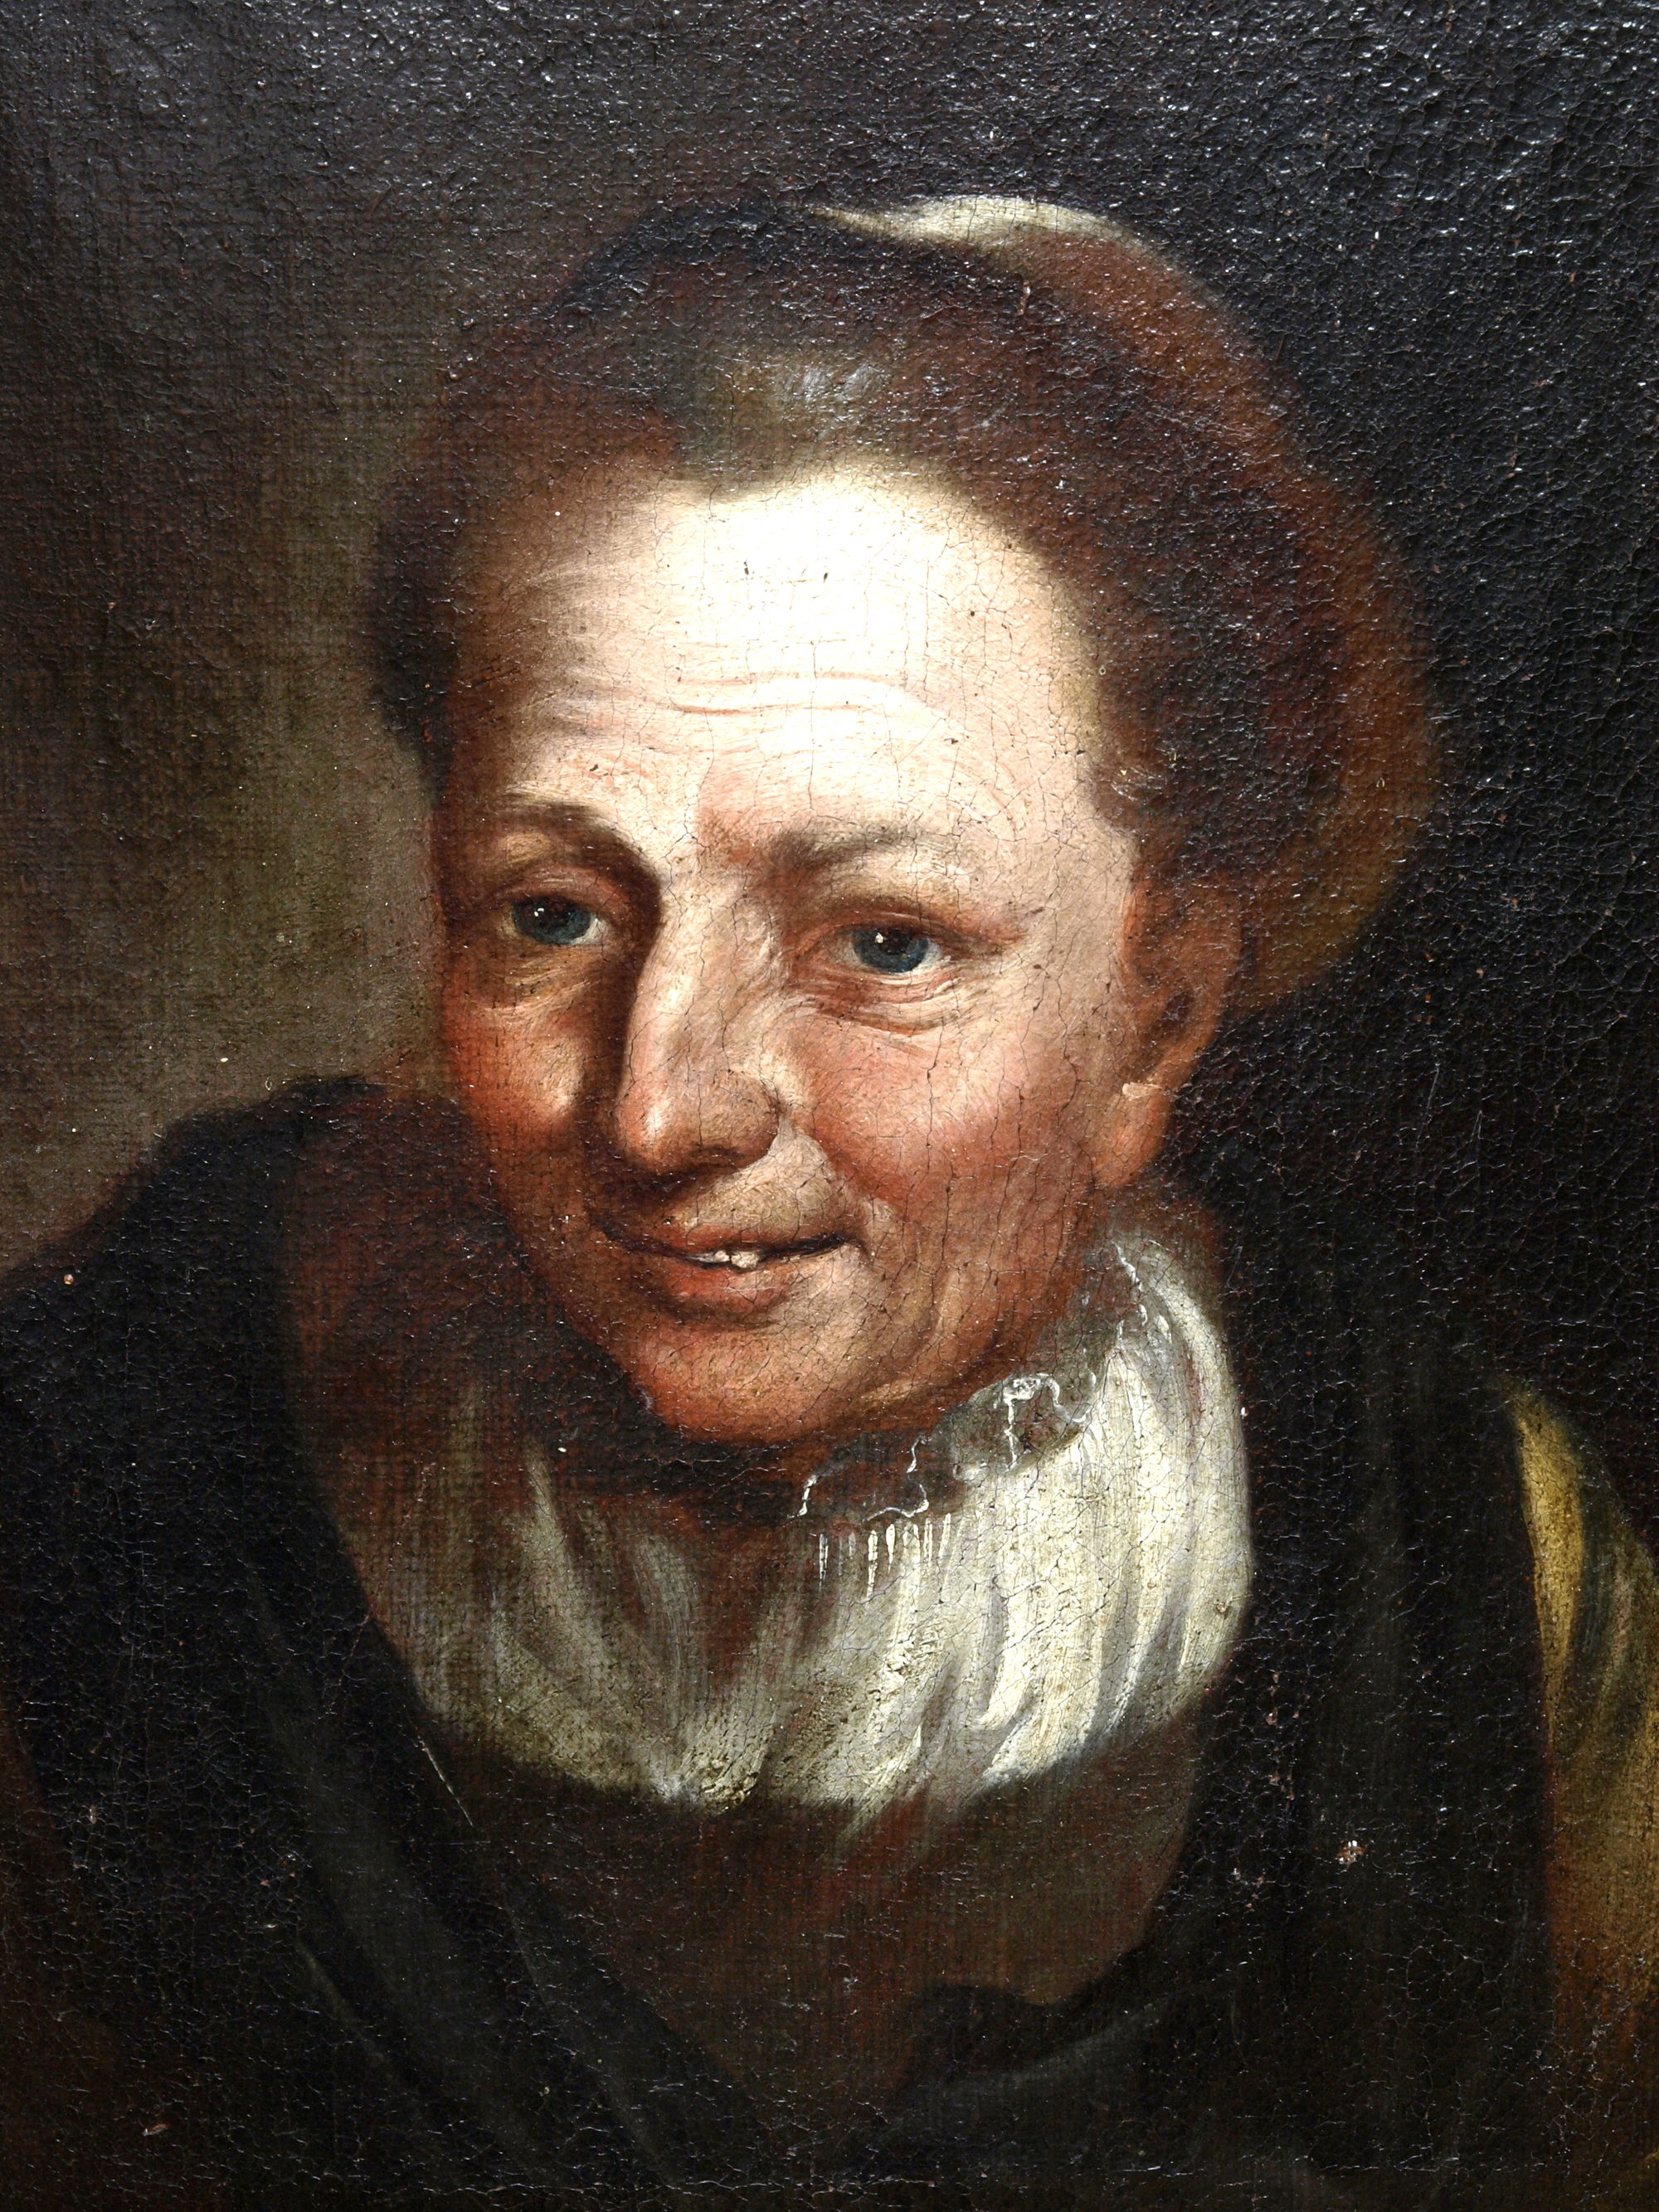 Barockes Portraitgemälde